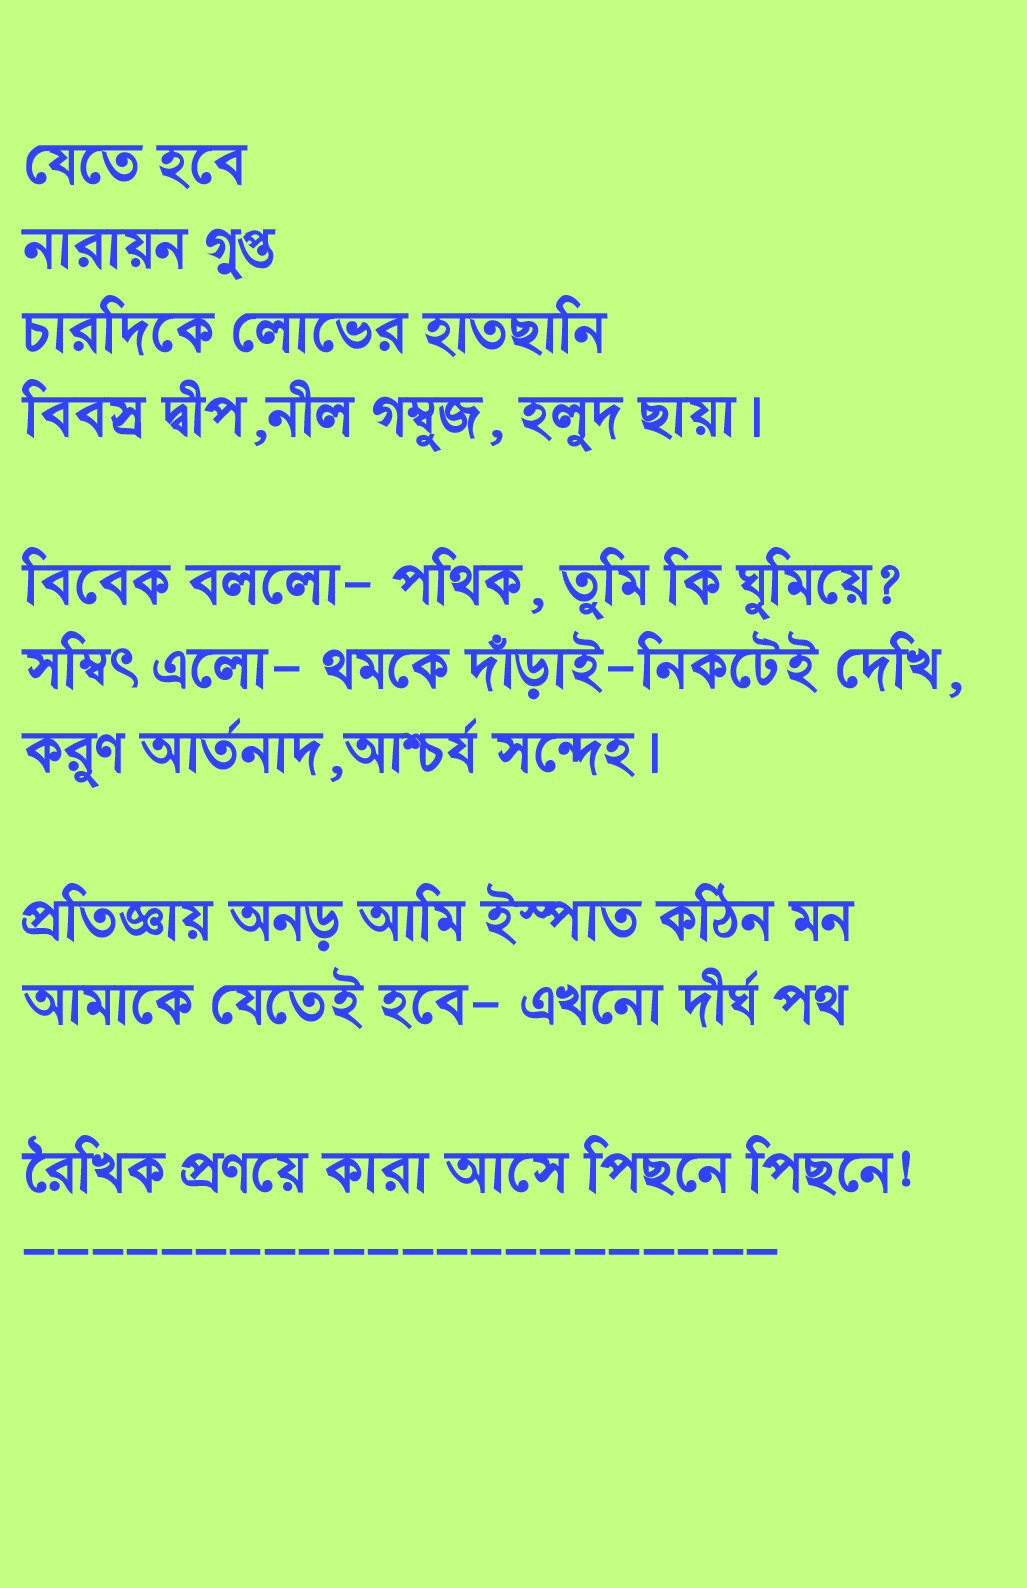 Love SMS in Hindi Messages in Marathi Bangla in Urdu Engslih for Girlfriend Messages Marathi Bengali Love SMS In Hindi Messages In Marathi